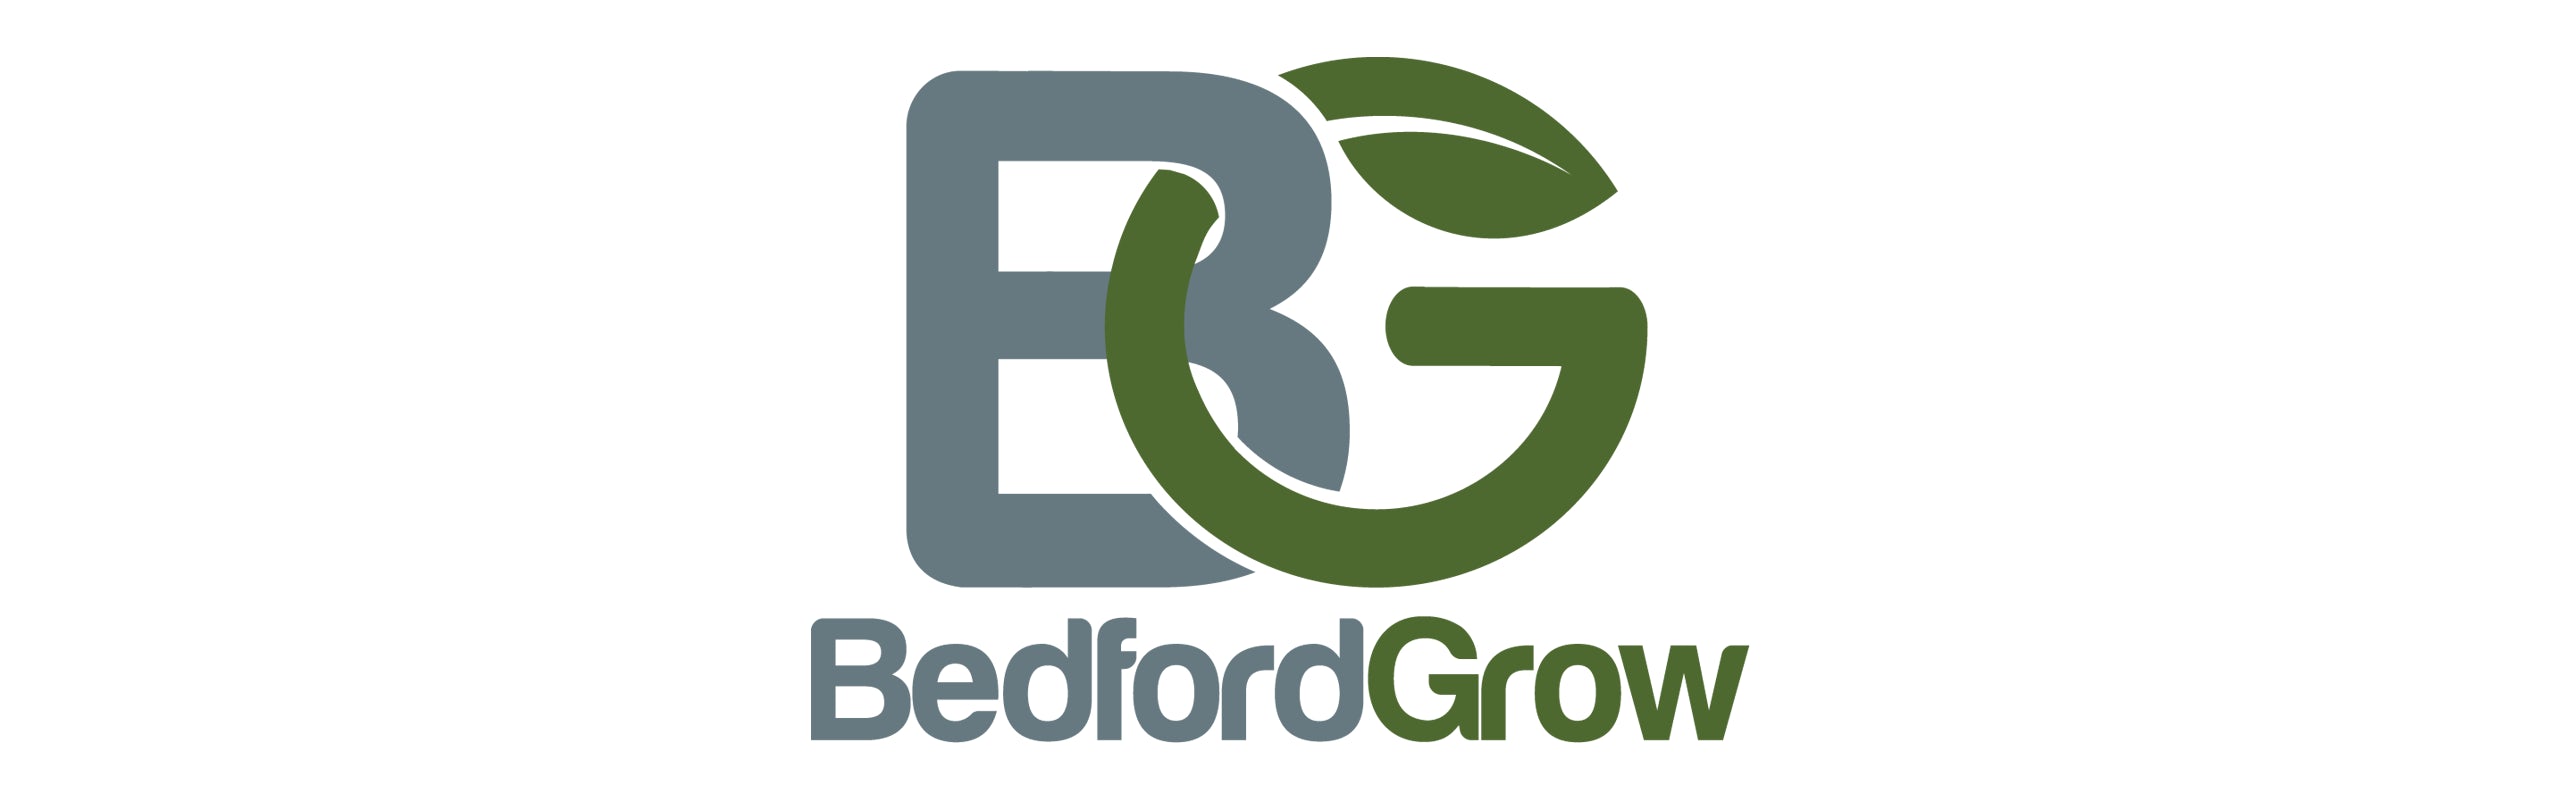 Bedford Grow banner